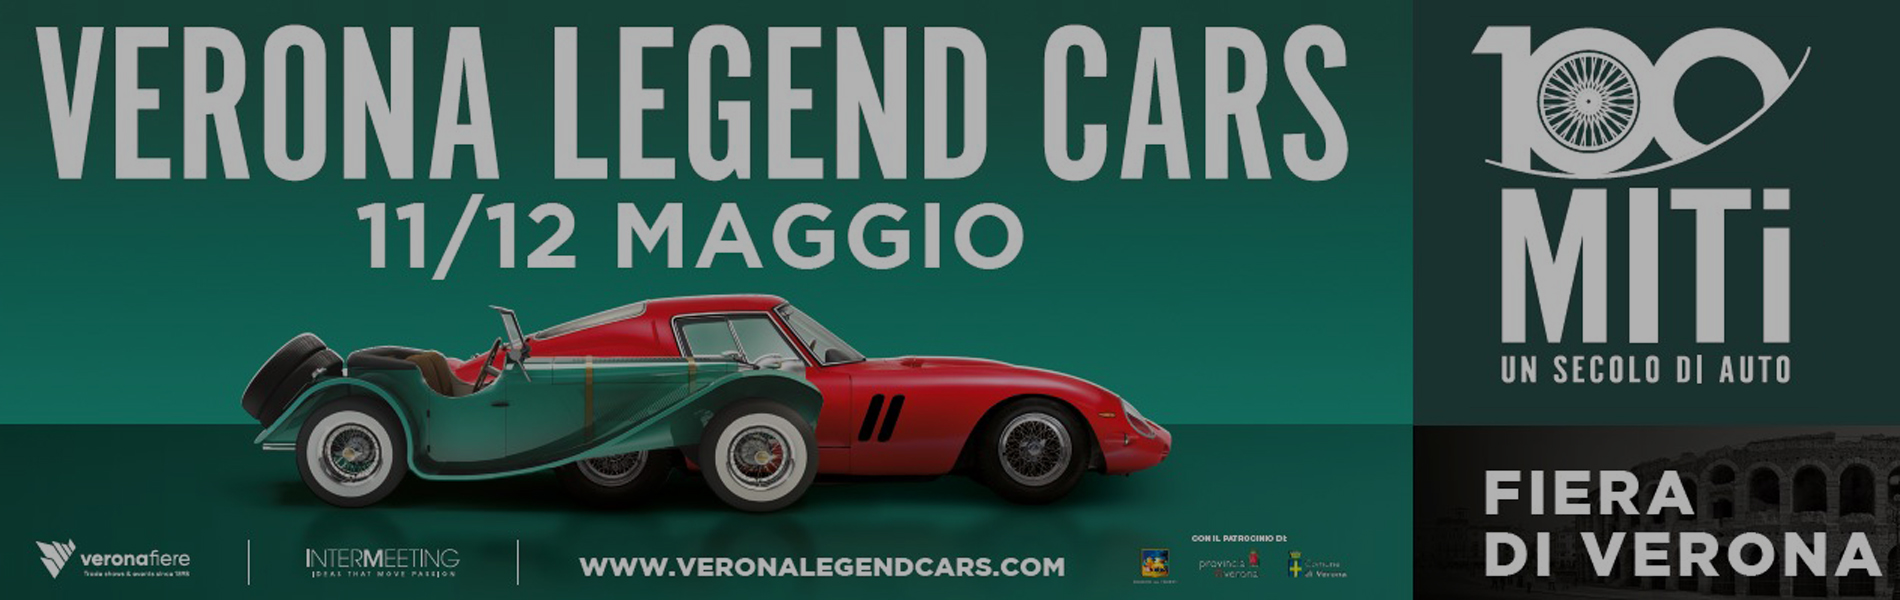 Verona Legend Cars 2019